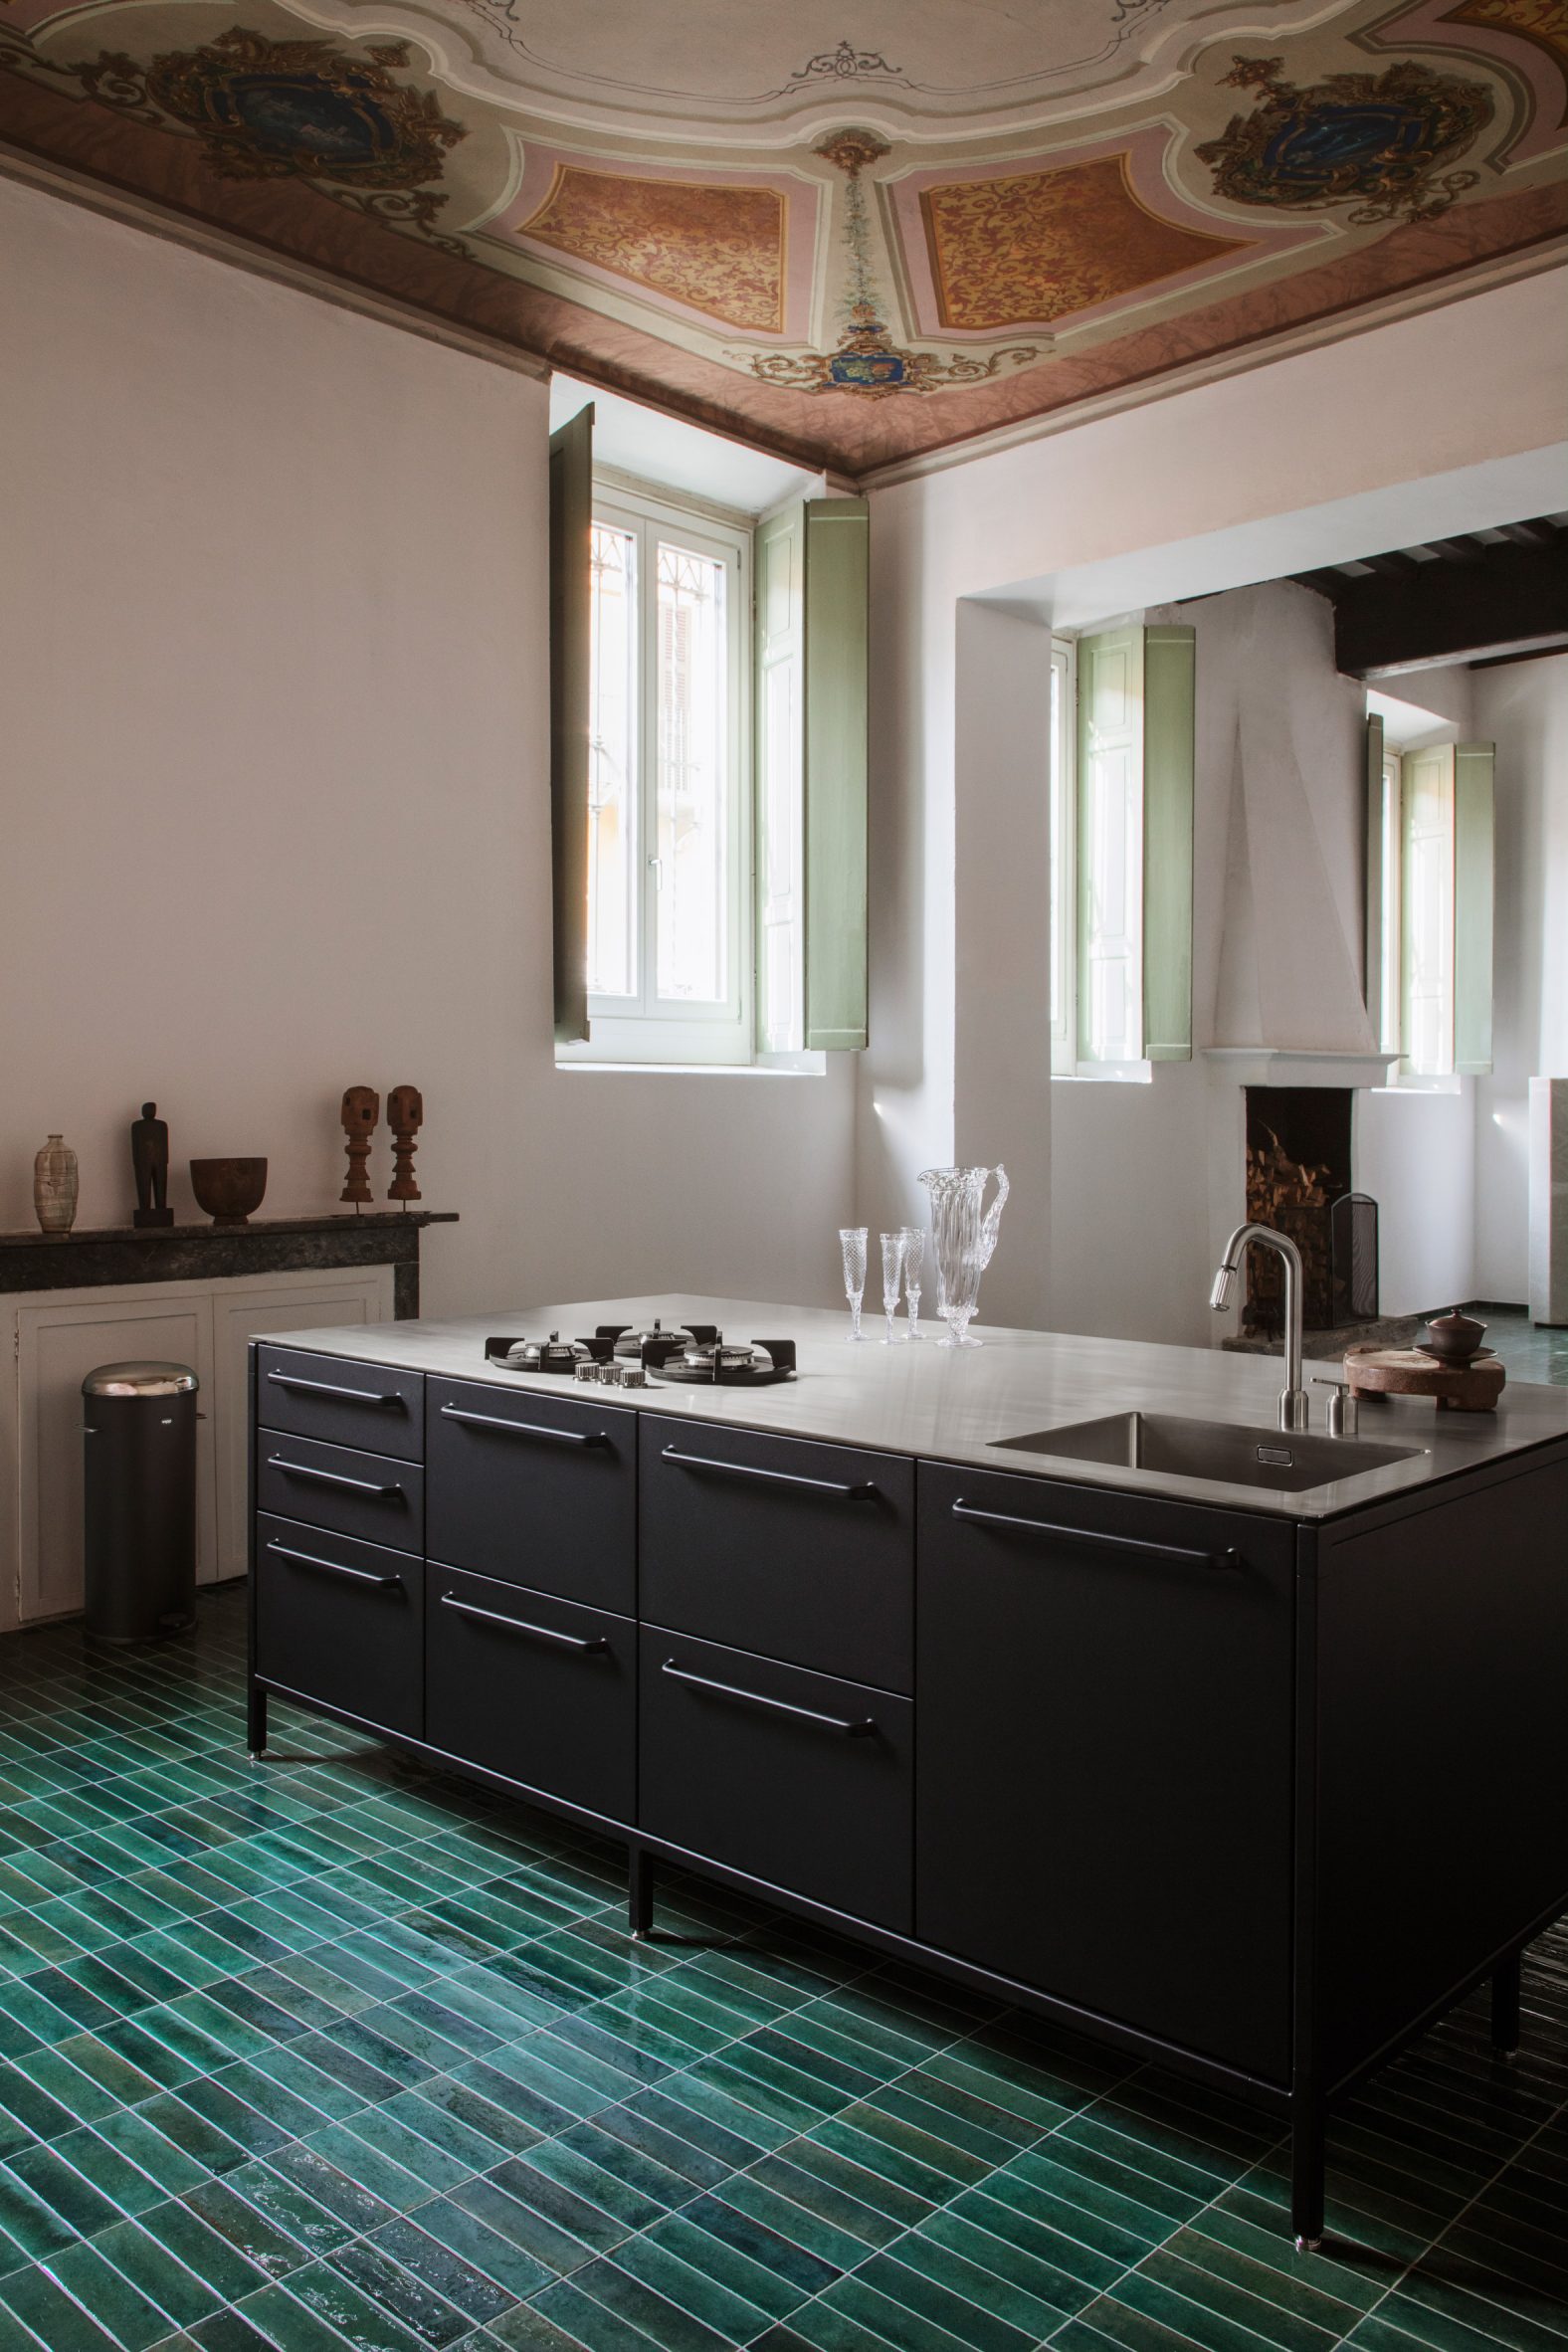 Black kitchen island counter with Italian palazzo 